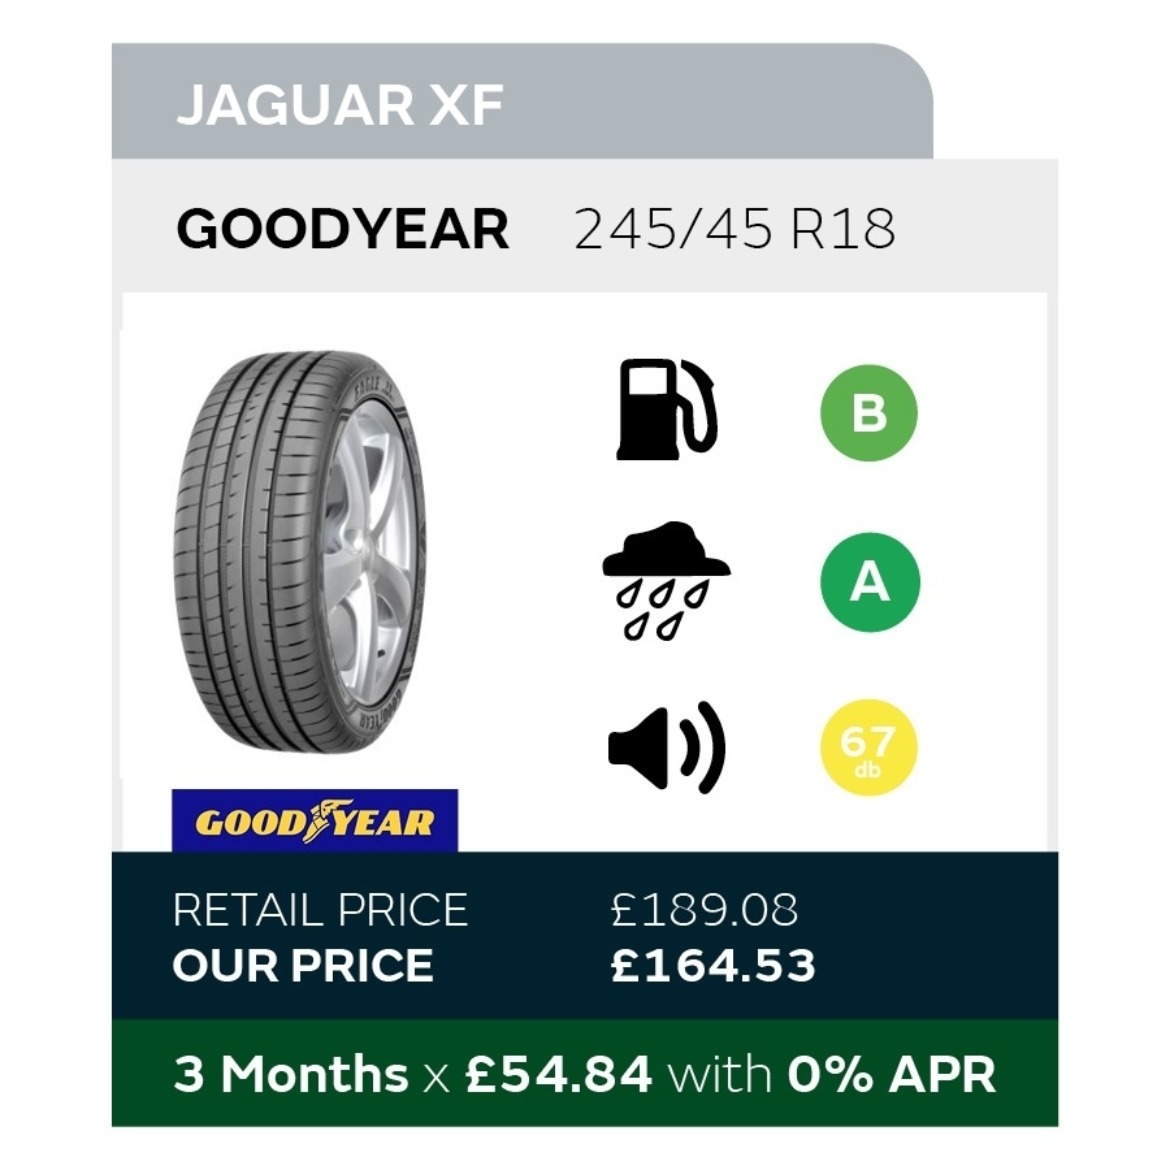 Jaguar XF Tyre Offer